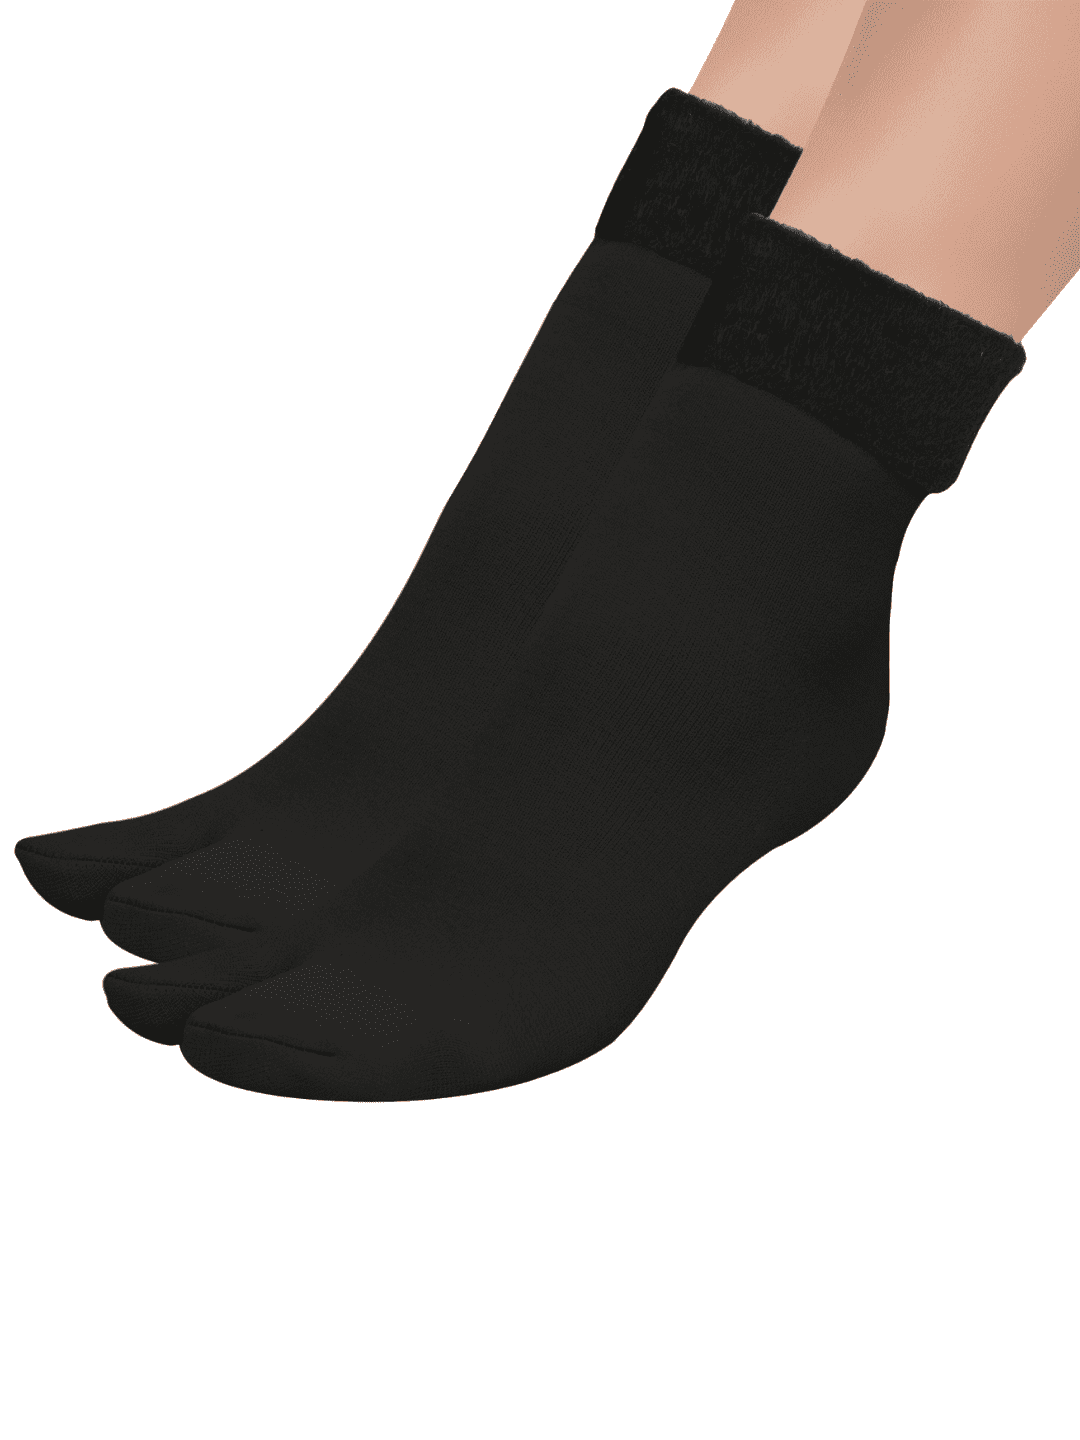 Fur Thumb Socks - Black